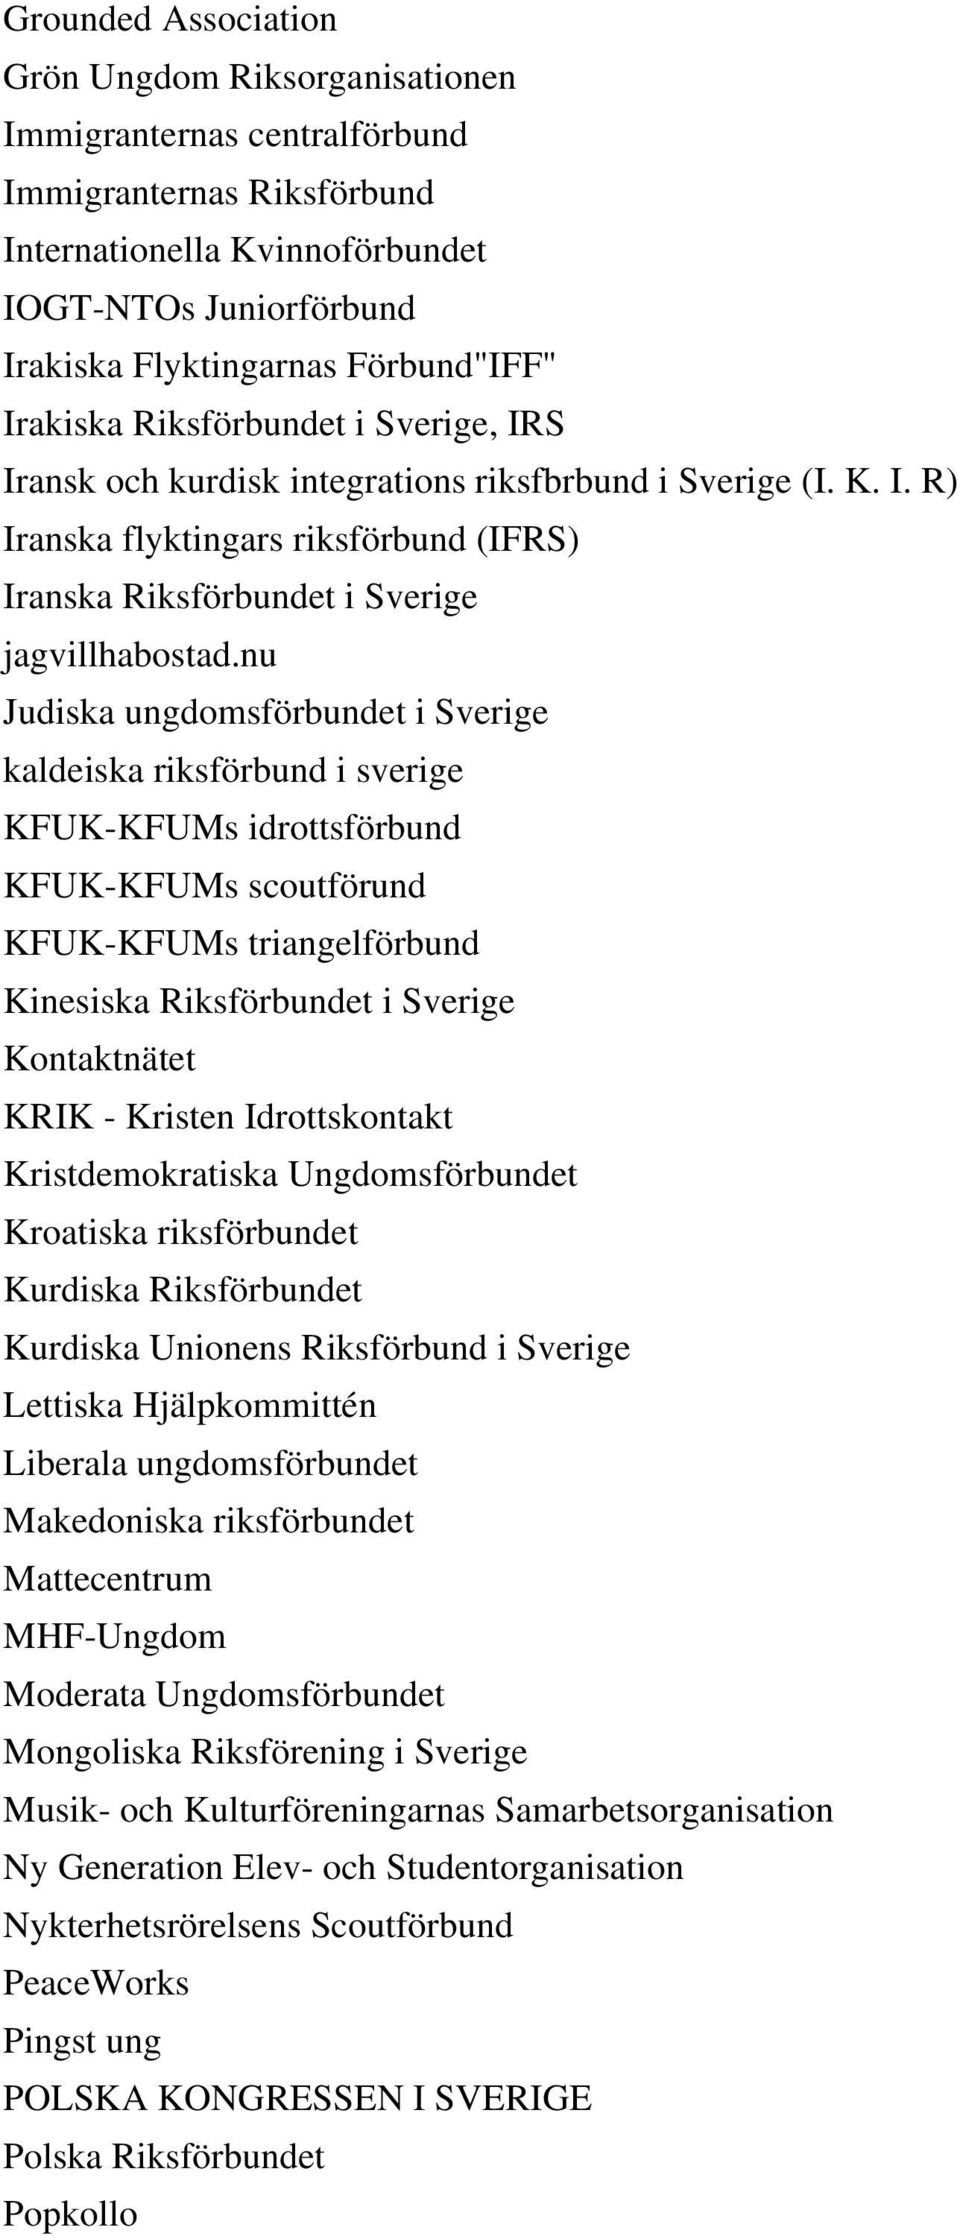 nu Judiska ungdomsförbundet i Sverige kaldeiska riksförbund i sverige KFUK-KFUMs idrottsförbund KFUK-KFUMs scoutförund KFUK-KFUMs triangelförbund Kinesiska Riksförbundet i Sverige Kontaktnätet KRIK -